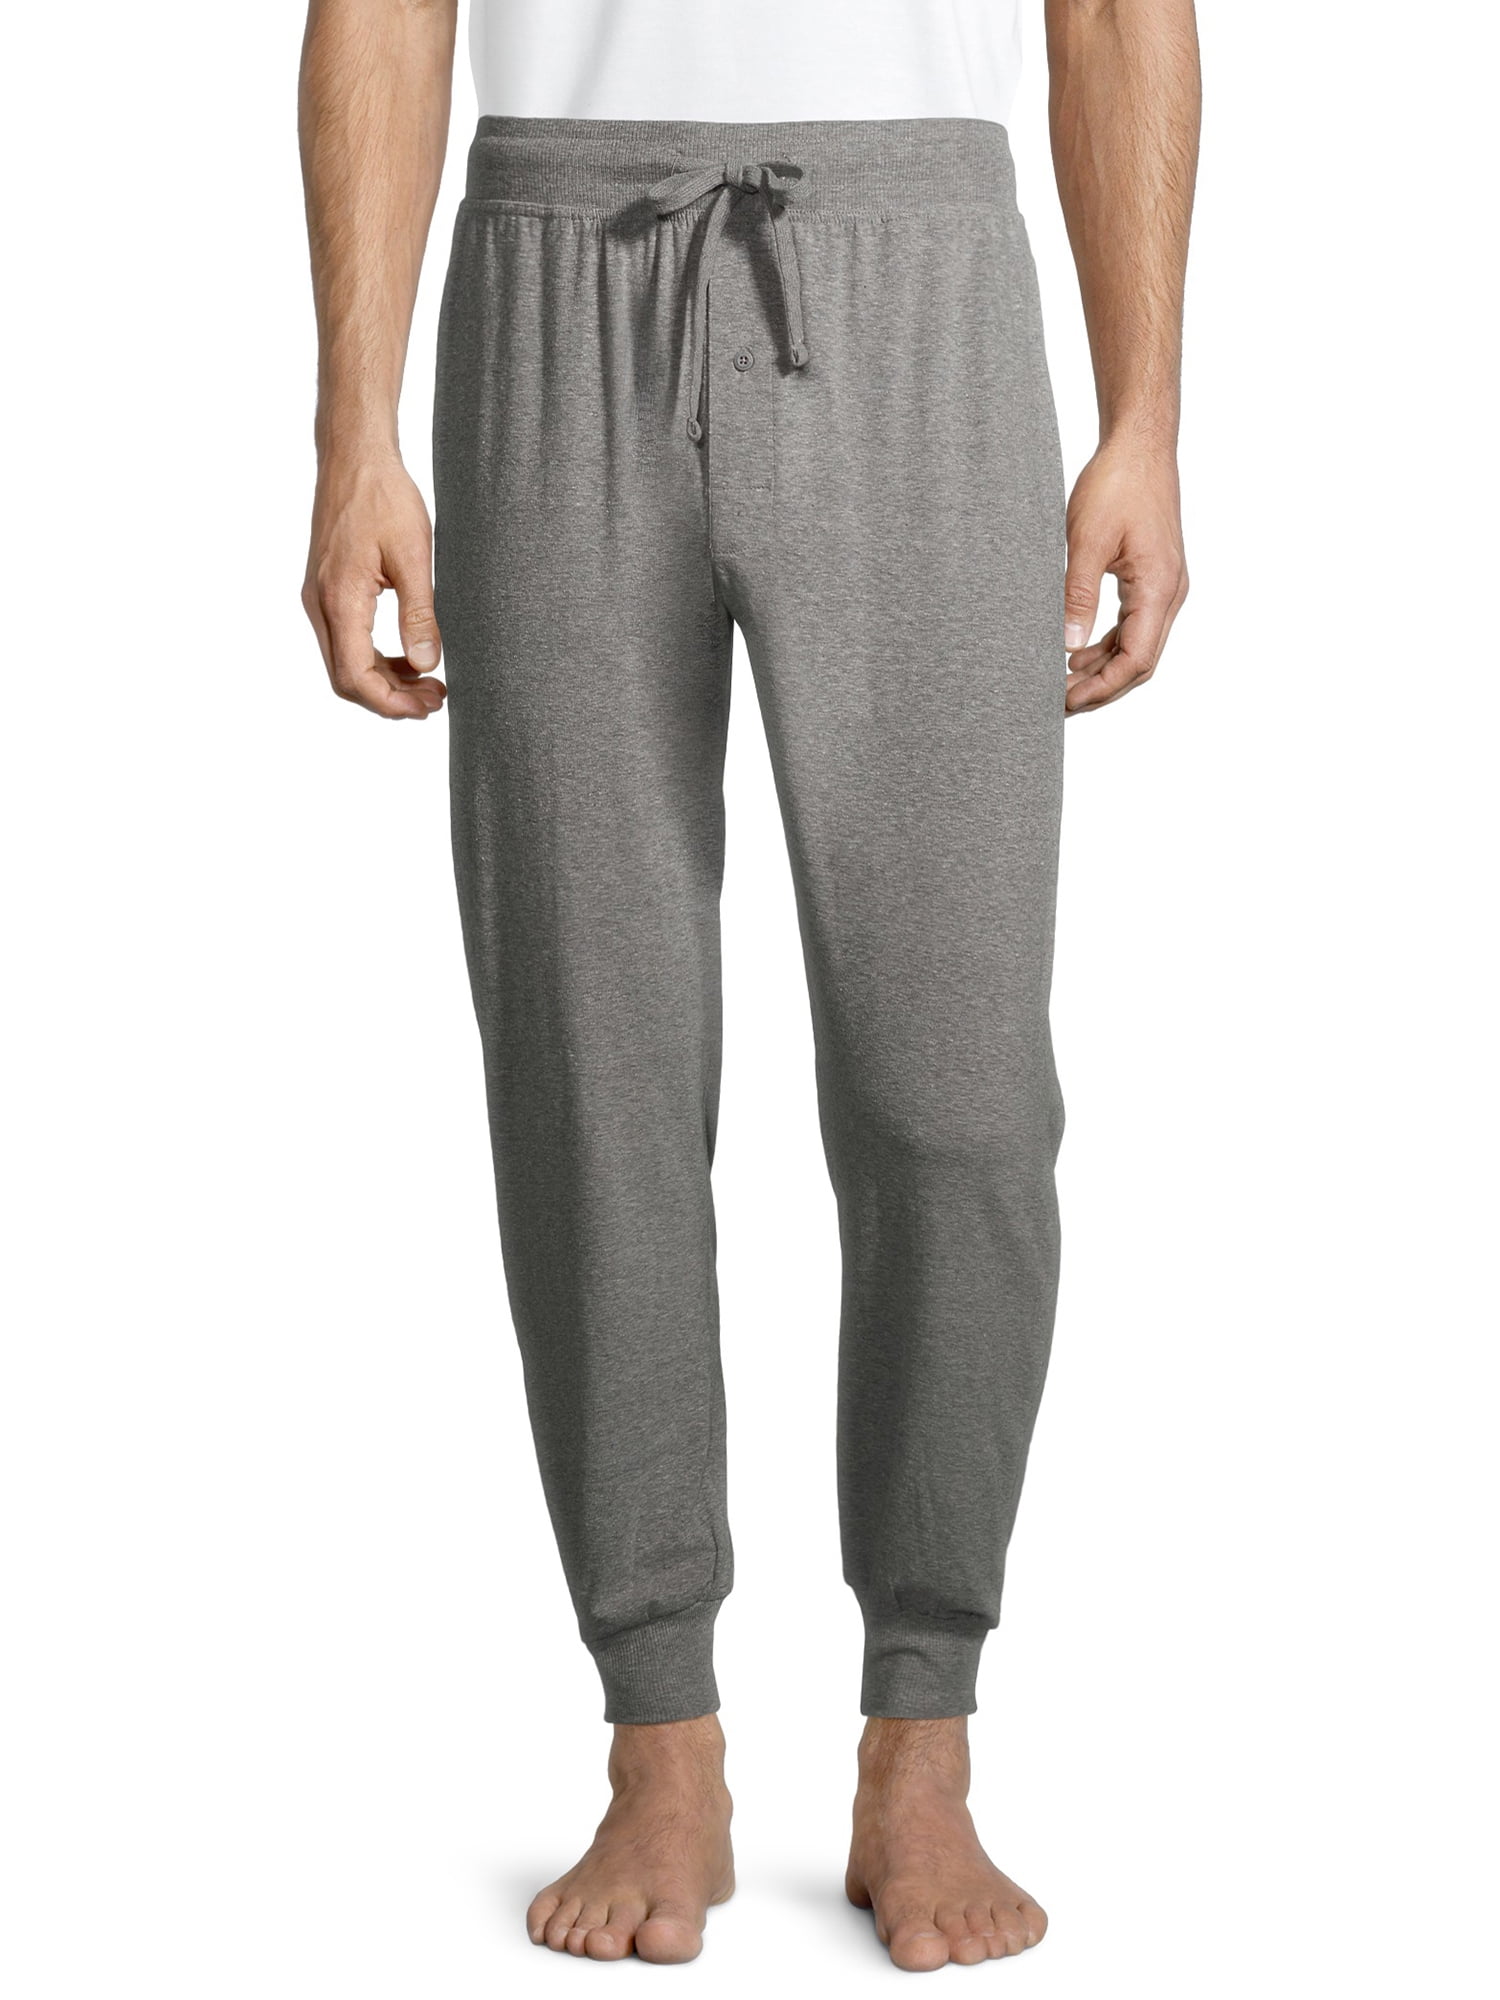 Hanes Men's Knit Jogger Sleep Pants - Walmart.com